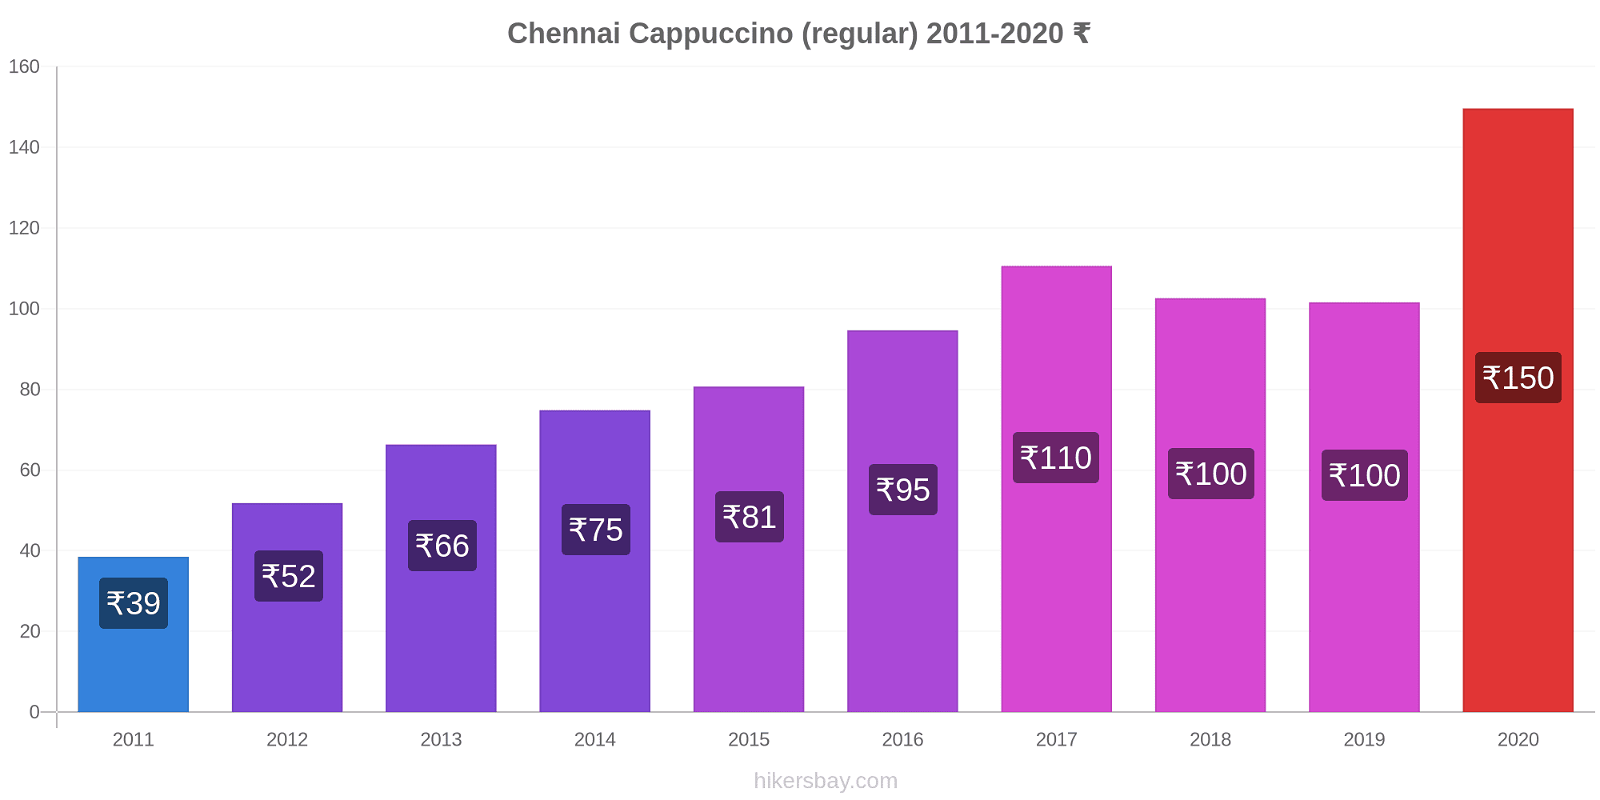 Chennai price changes Cappuccino (regular) hikersbay.com